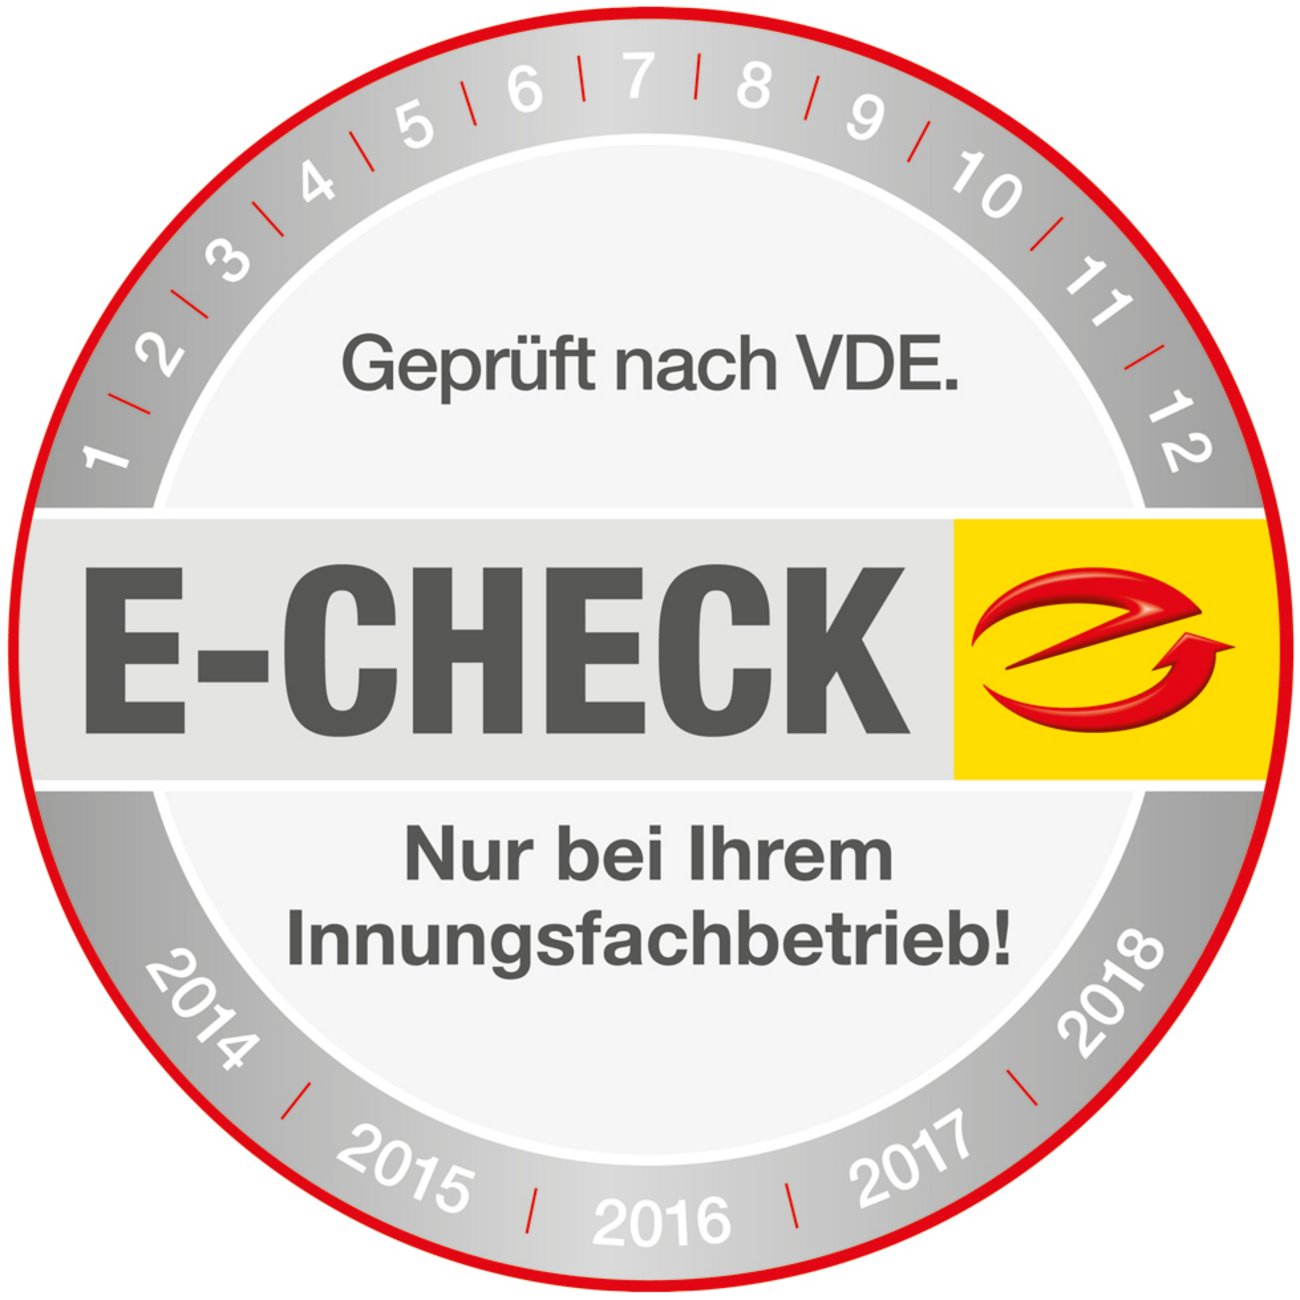 Der E-Check bei Elektro Robert Kramer in Wörth/Do.